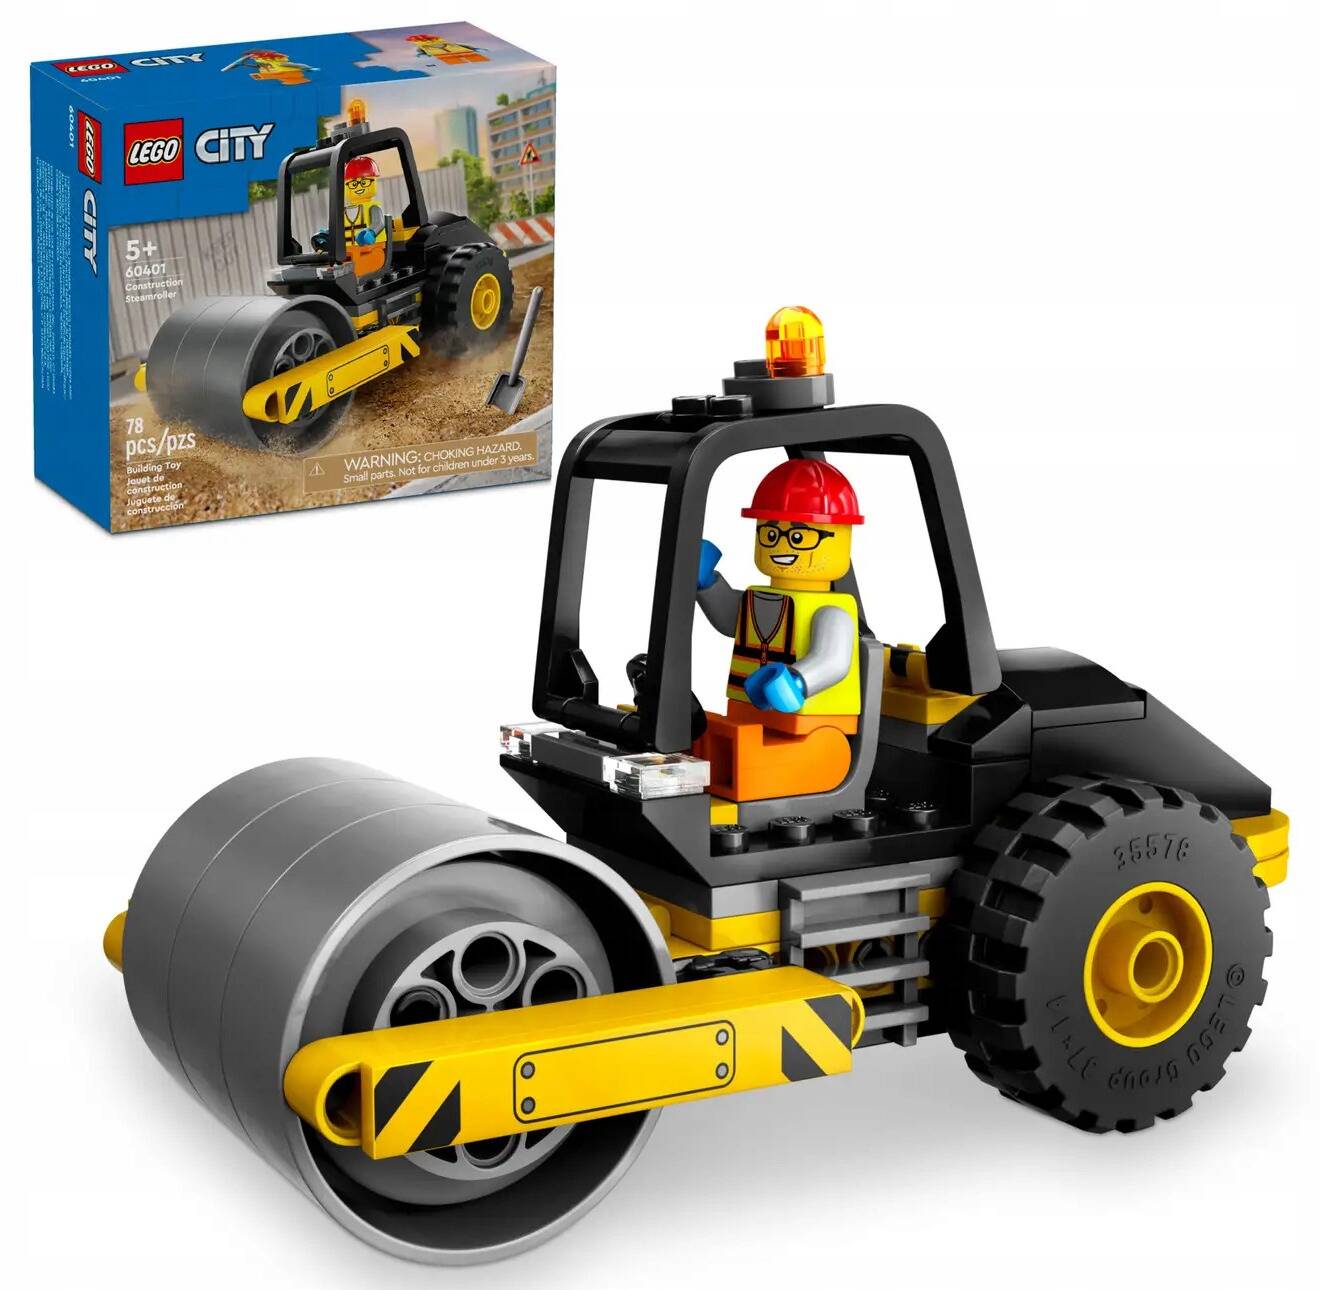 LEGO City Walec Budowlany 78el. 5+ 60401_1